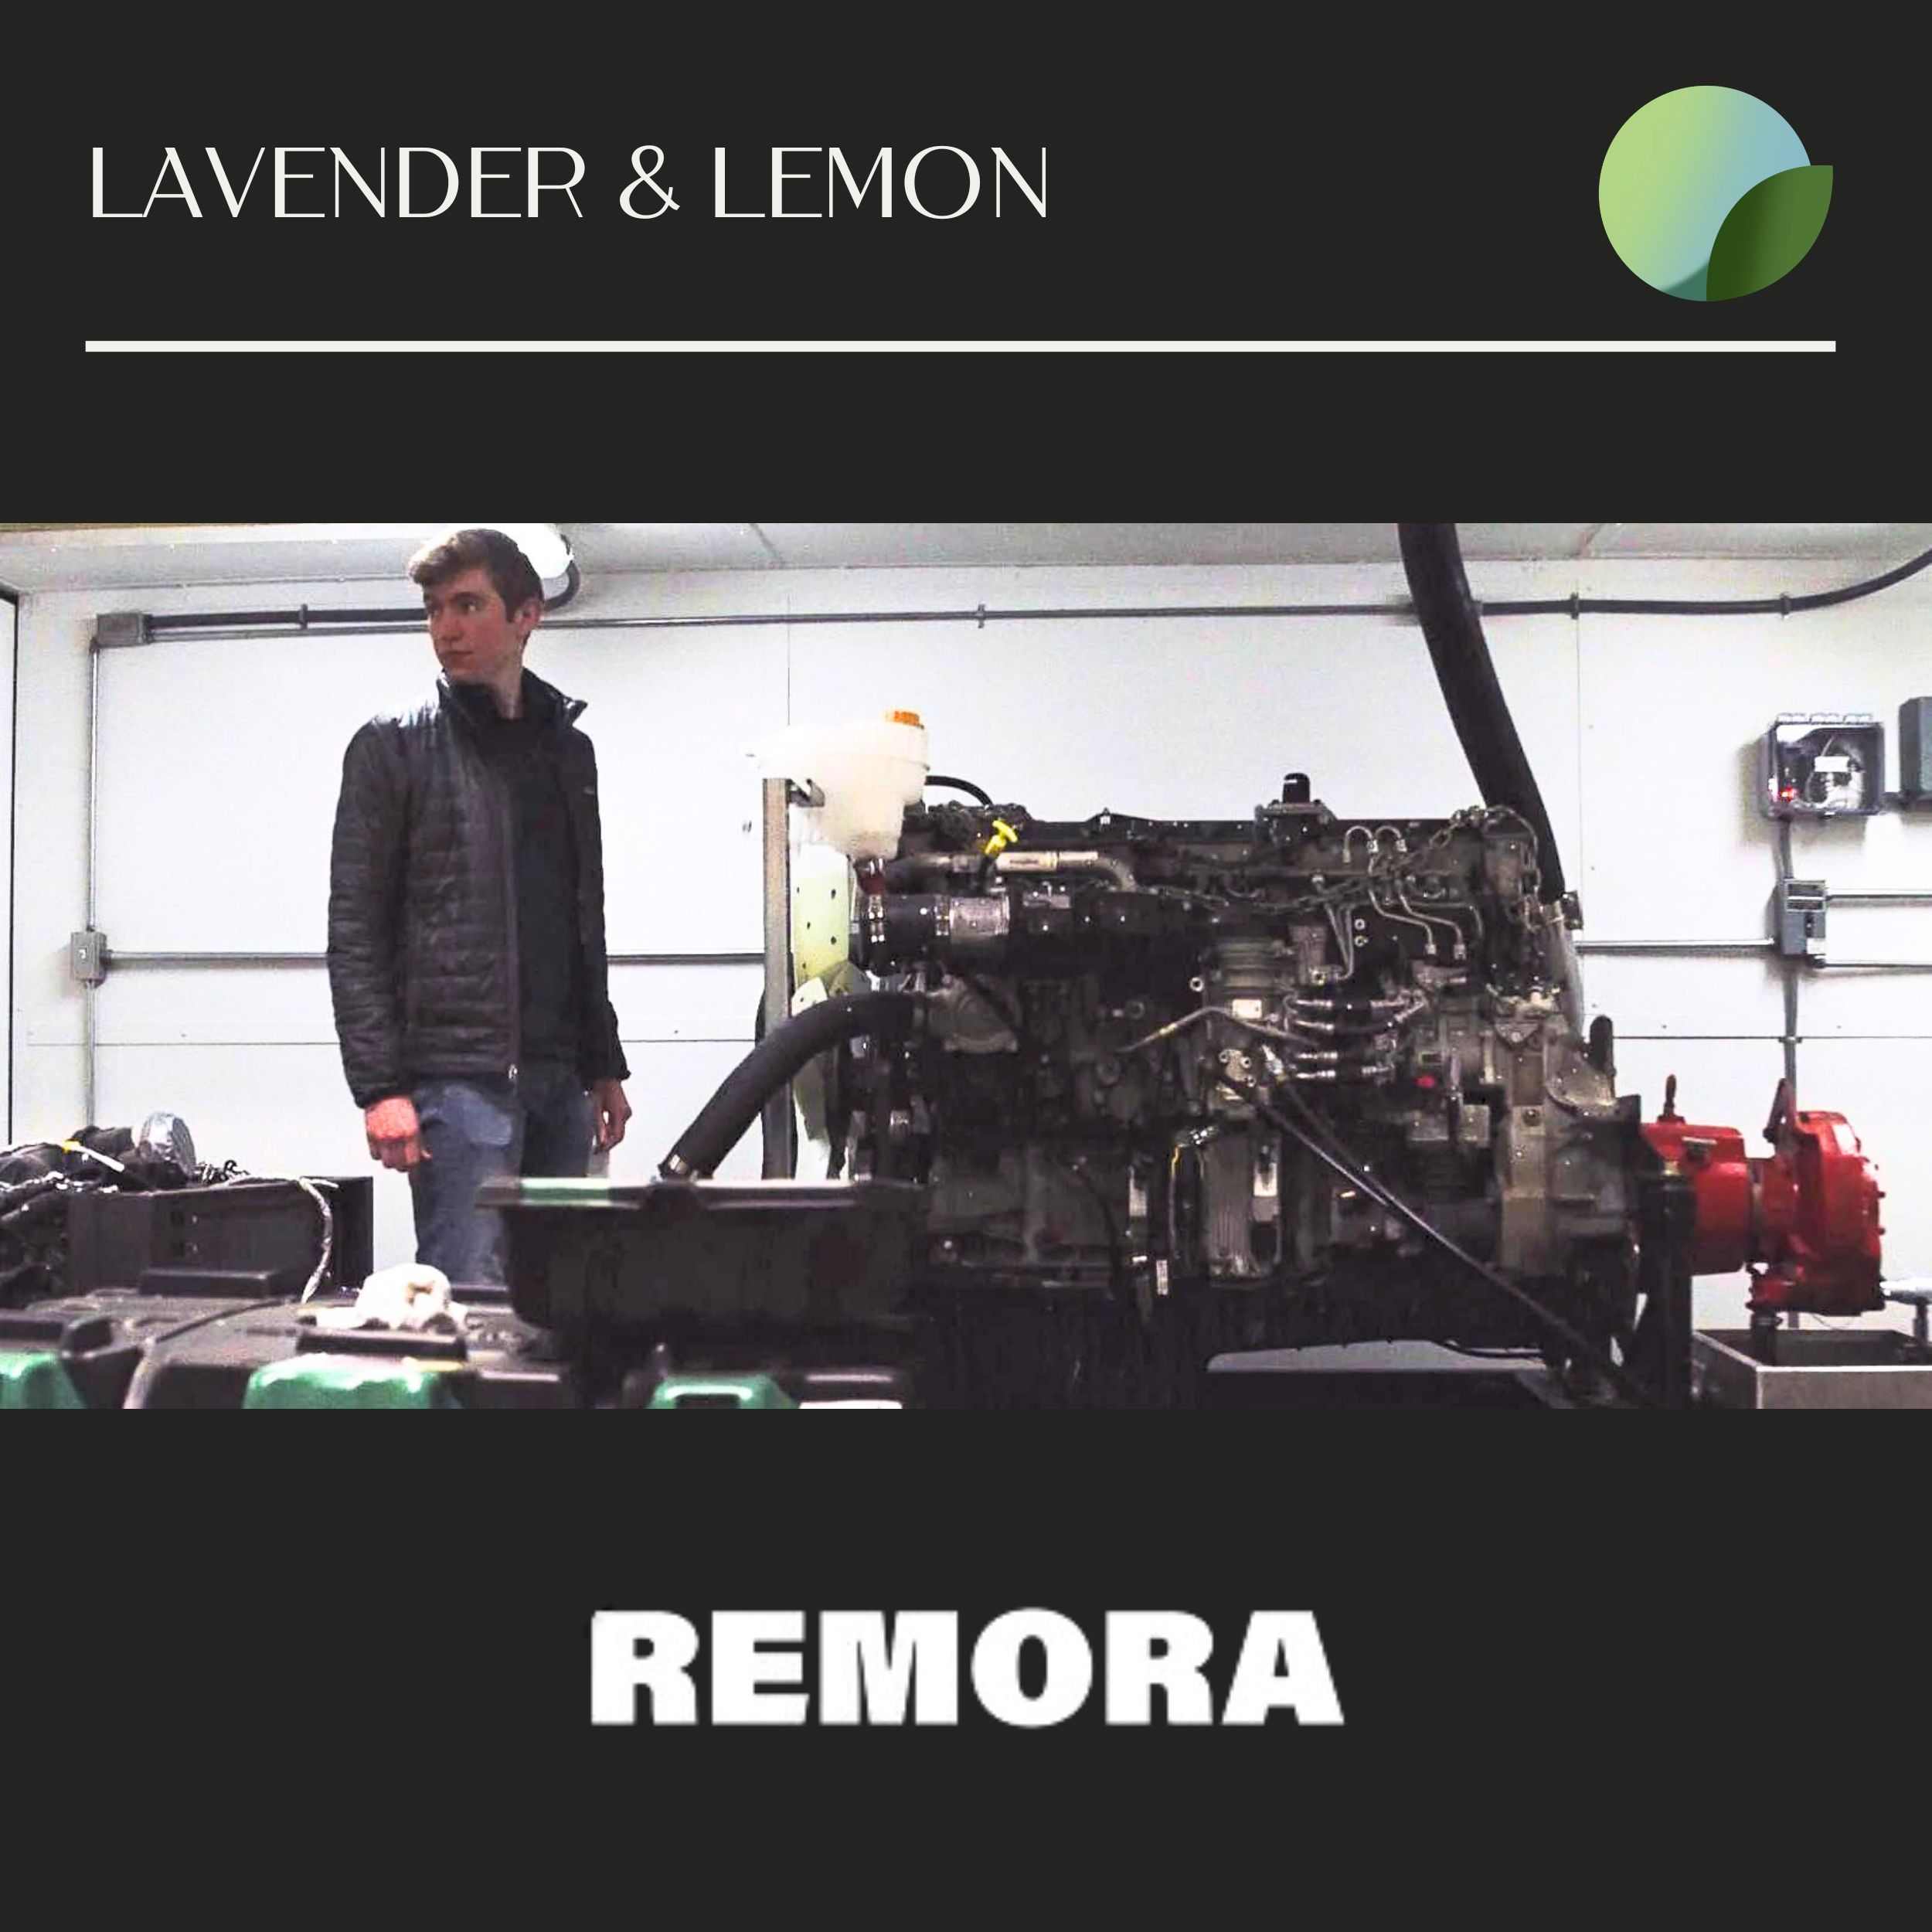 Lavender & Lemon supports Remora via Shopify Planet